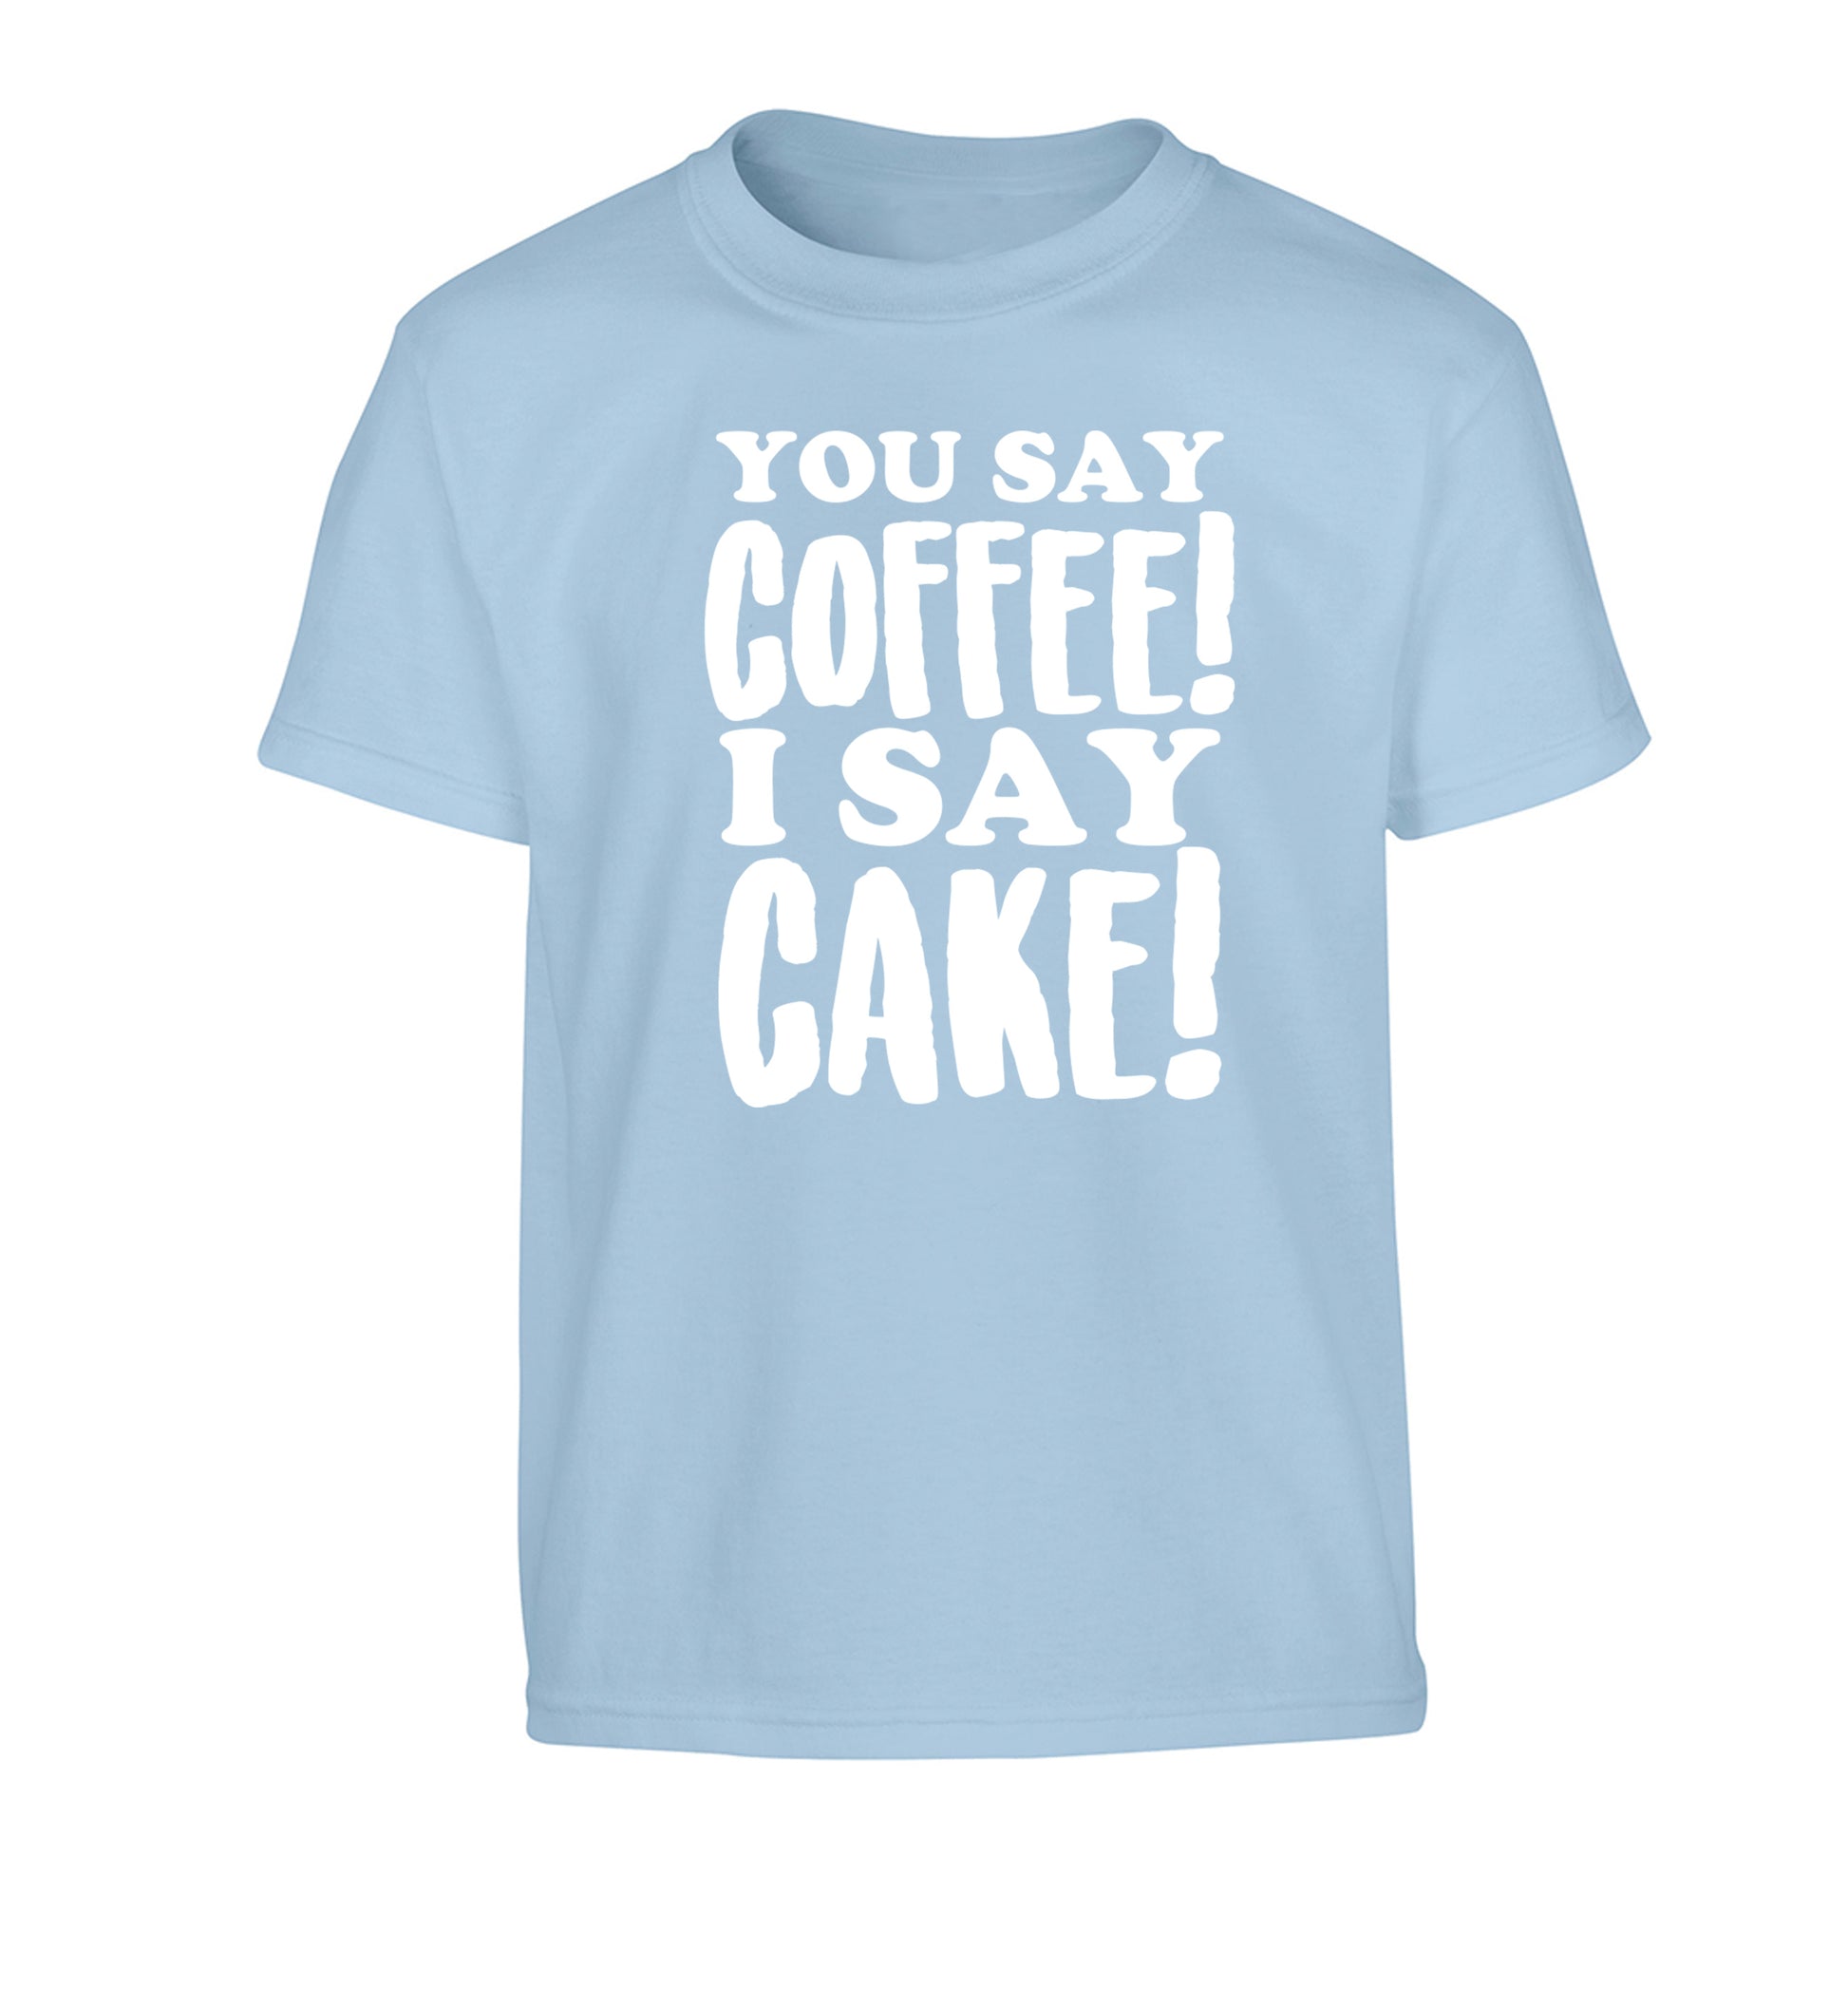 You say coffee I say cake! Children's light blue Tshirt 12-14 Years